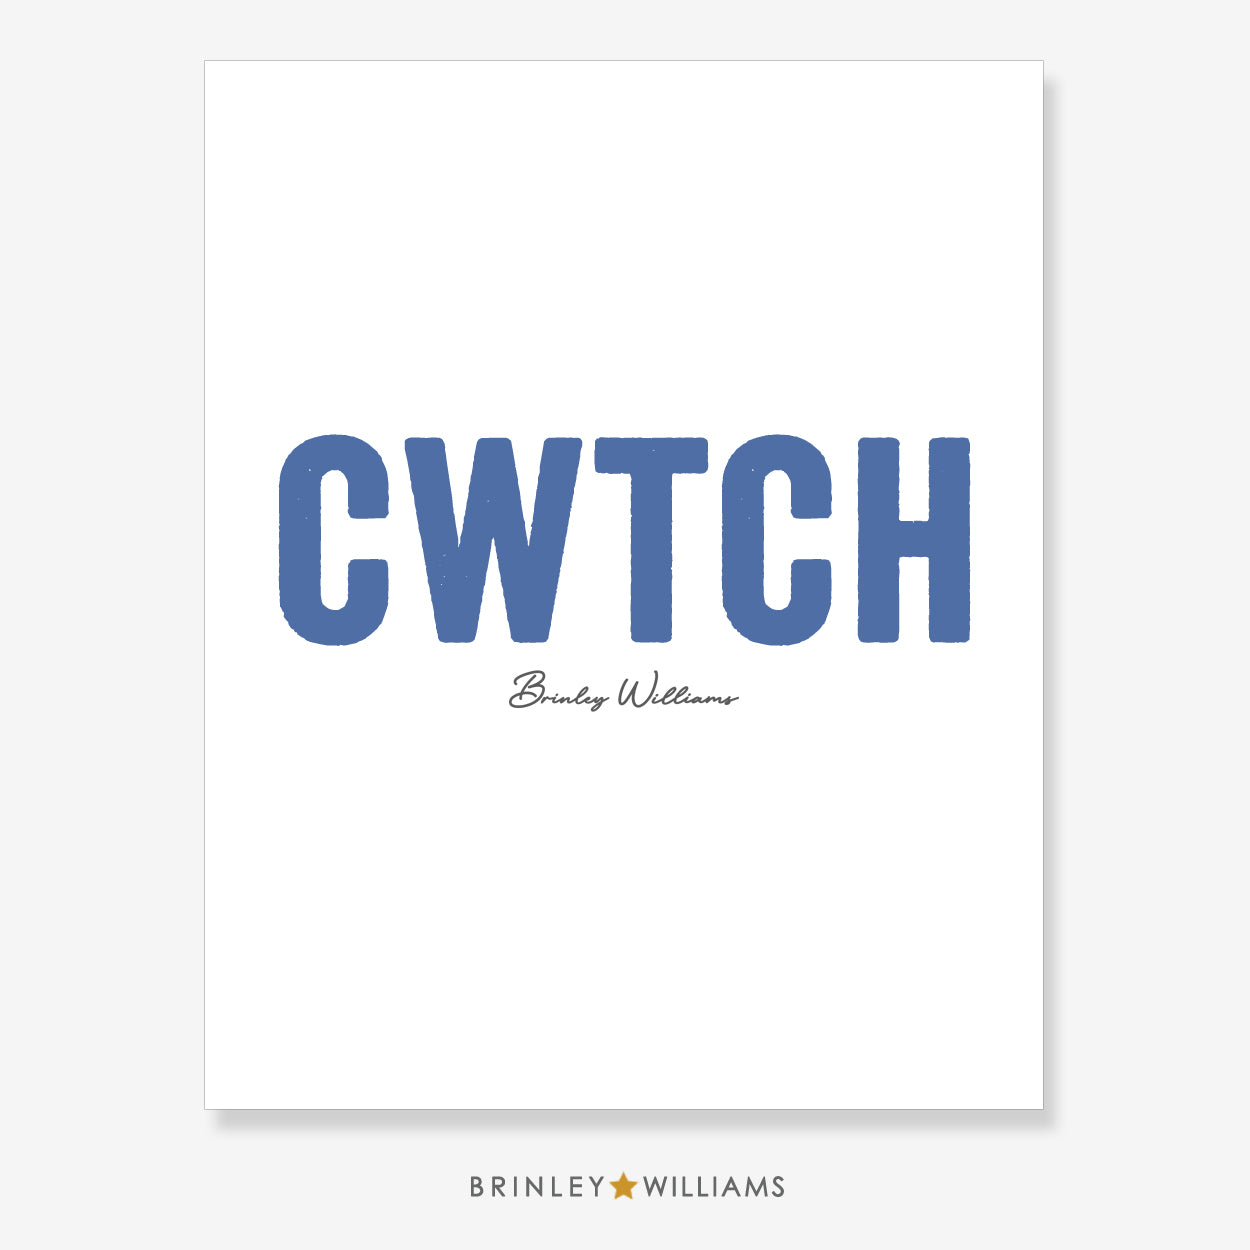 Big Cwtch Wall Art Poster - Blue